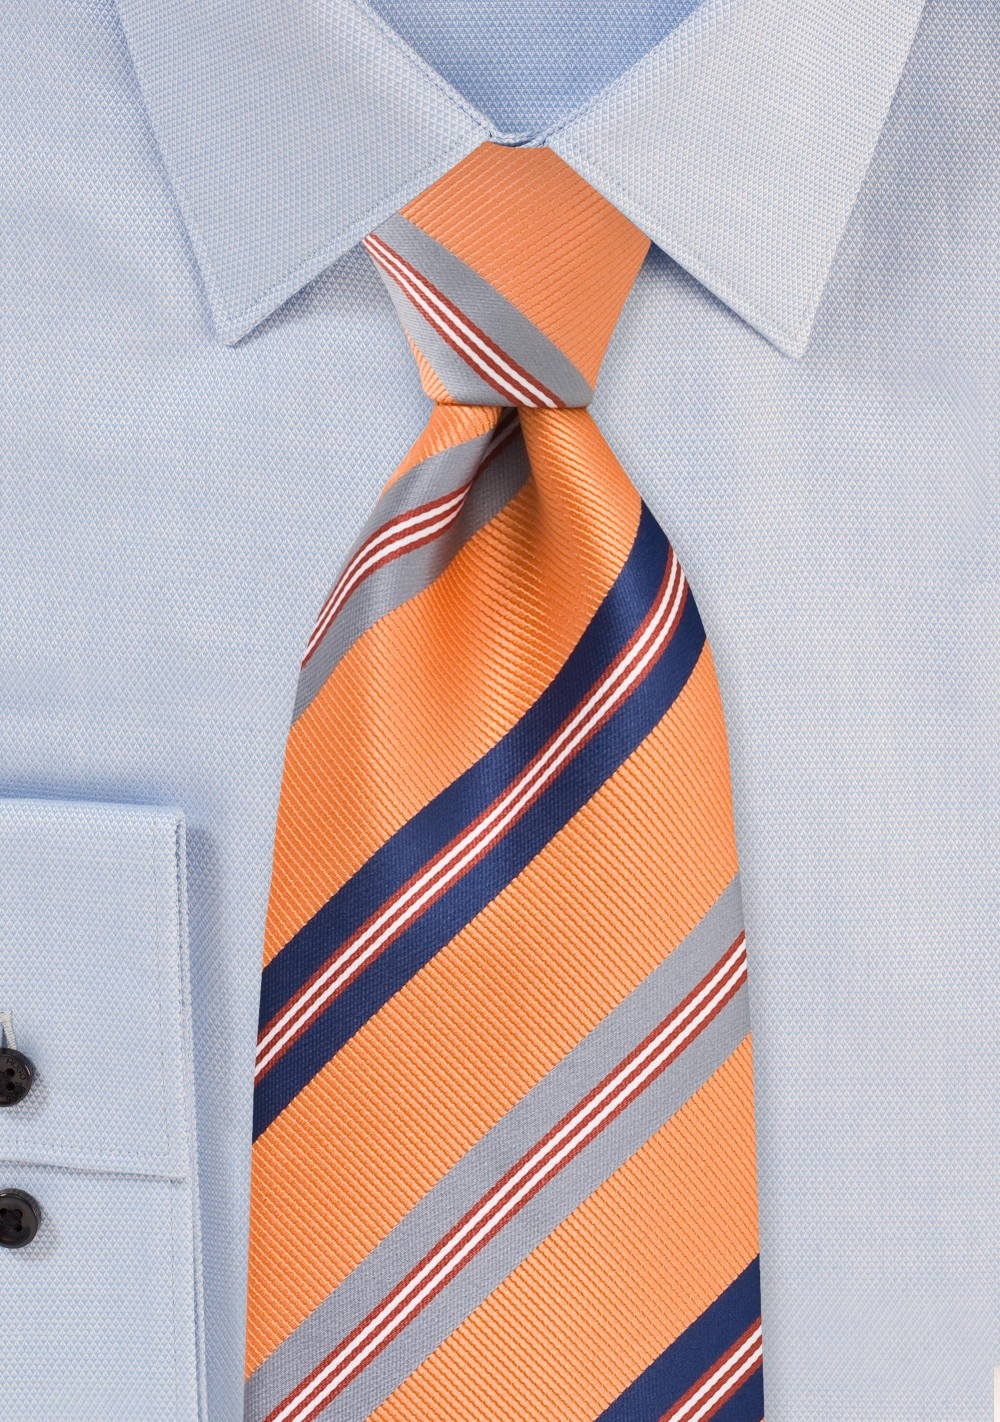 Striped Tie in Orange, Navy, Silver